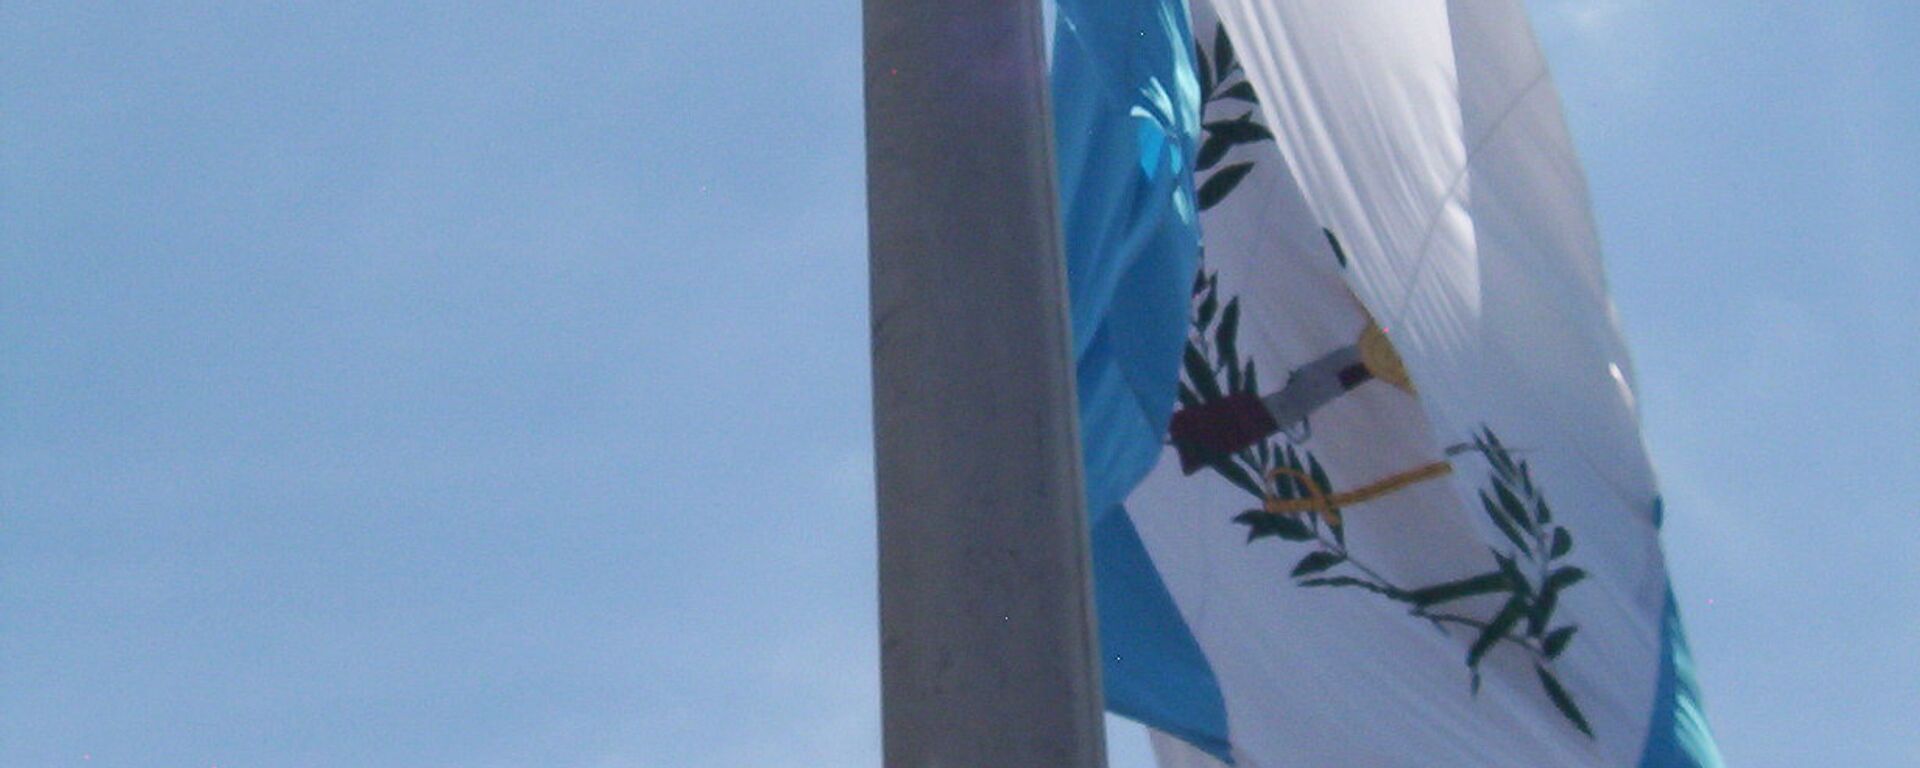 Bandera de Guatemala - Sputnik Mundo, 1920, 22.02.2022